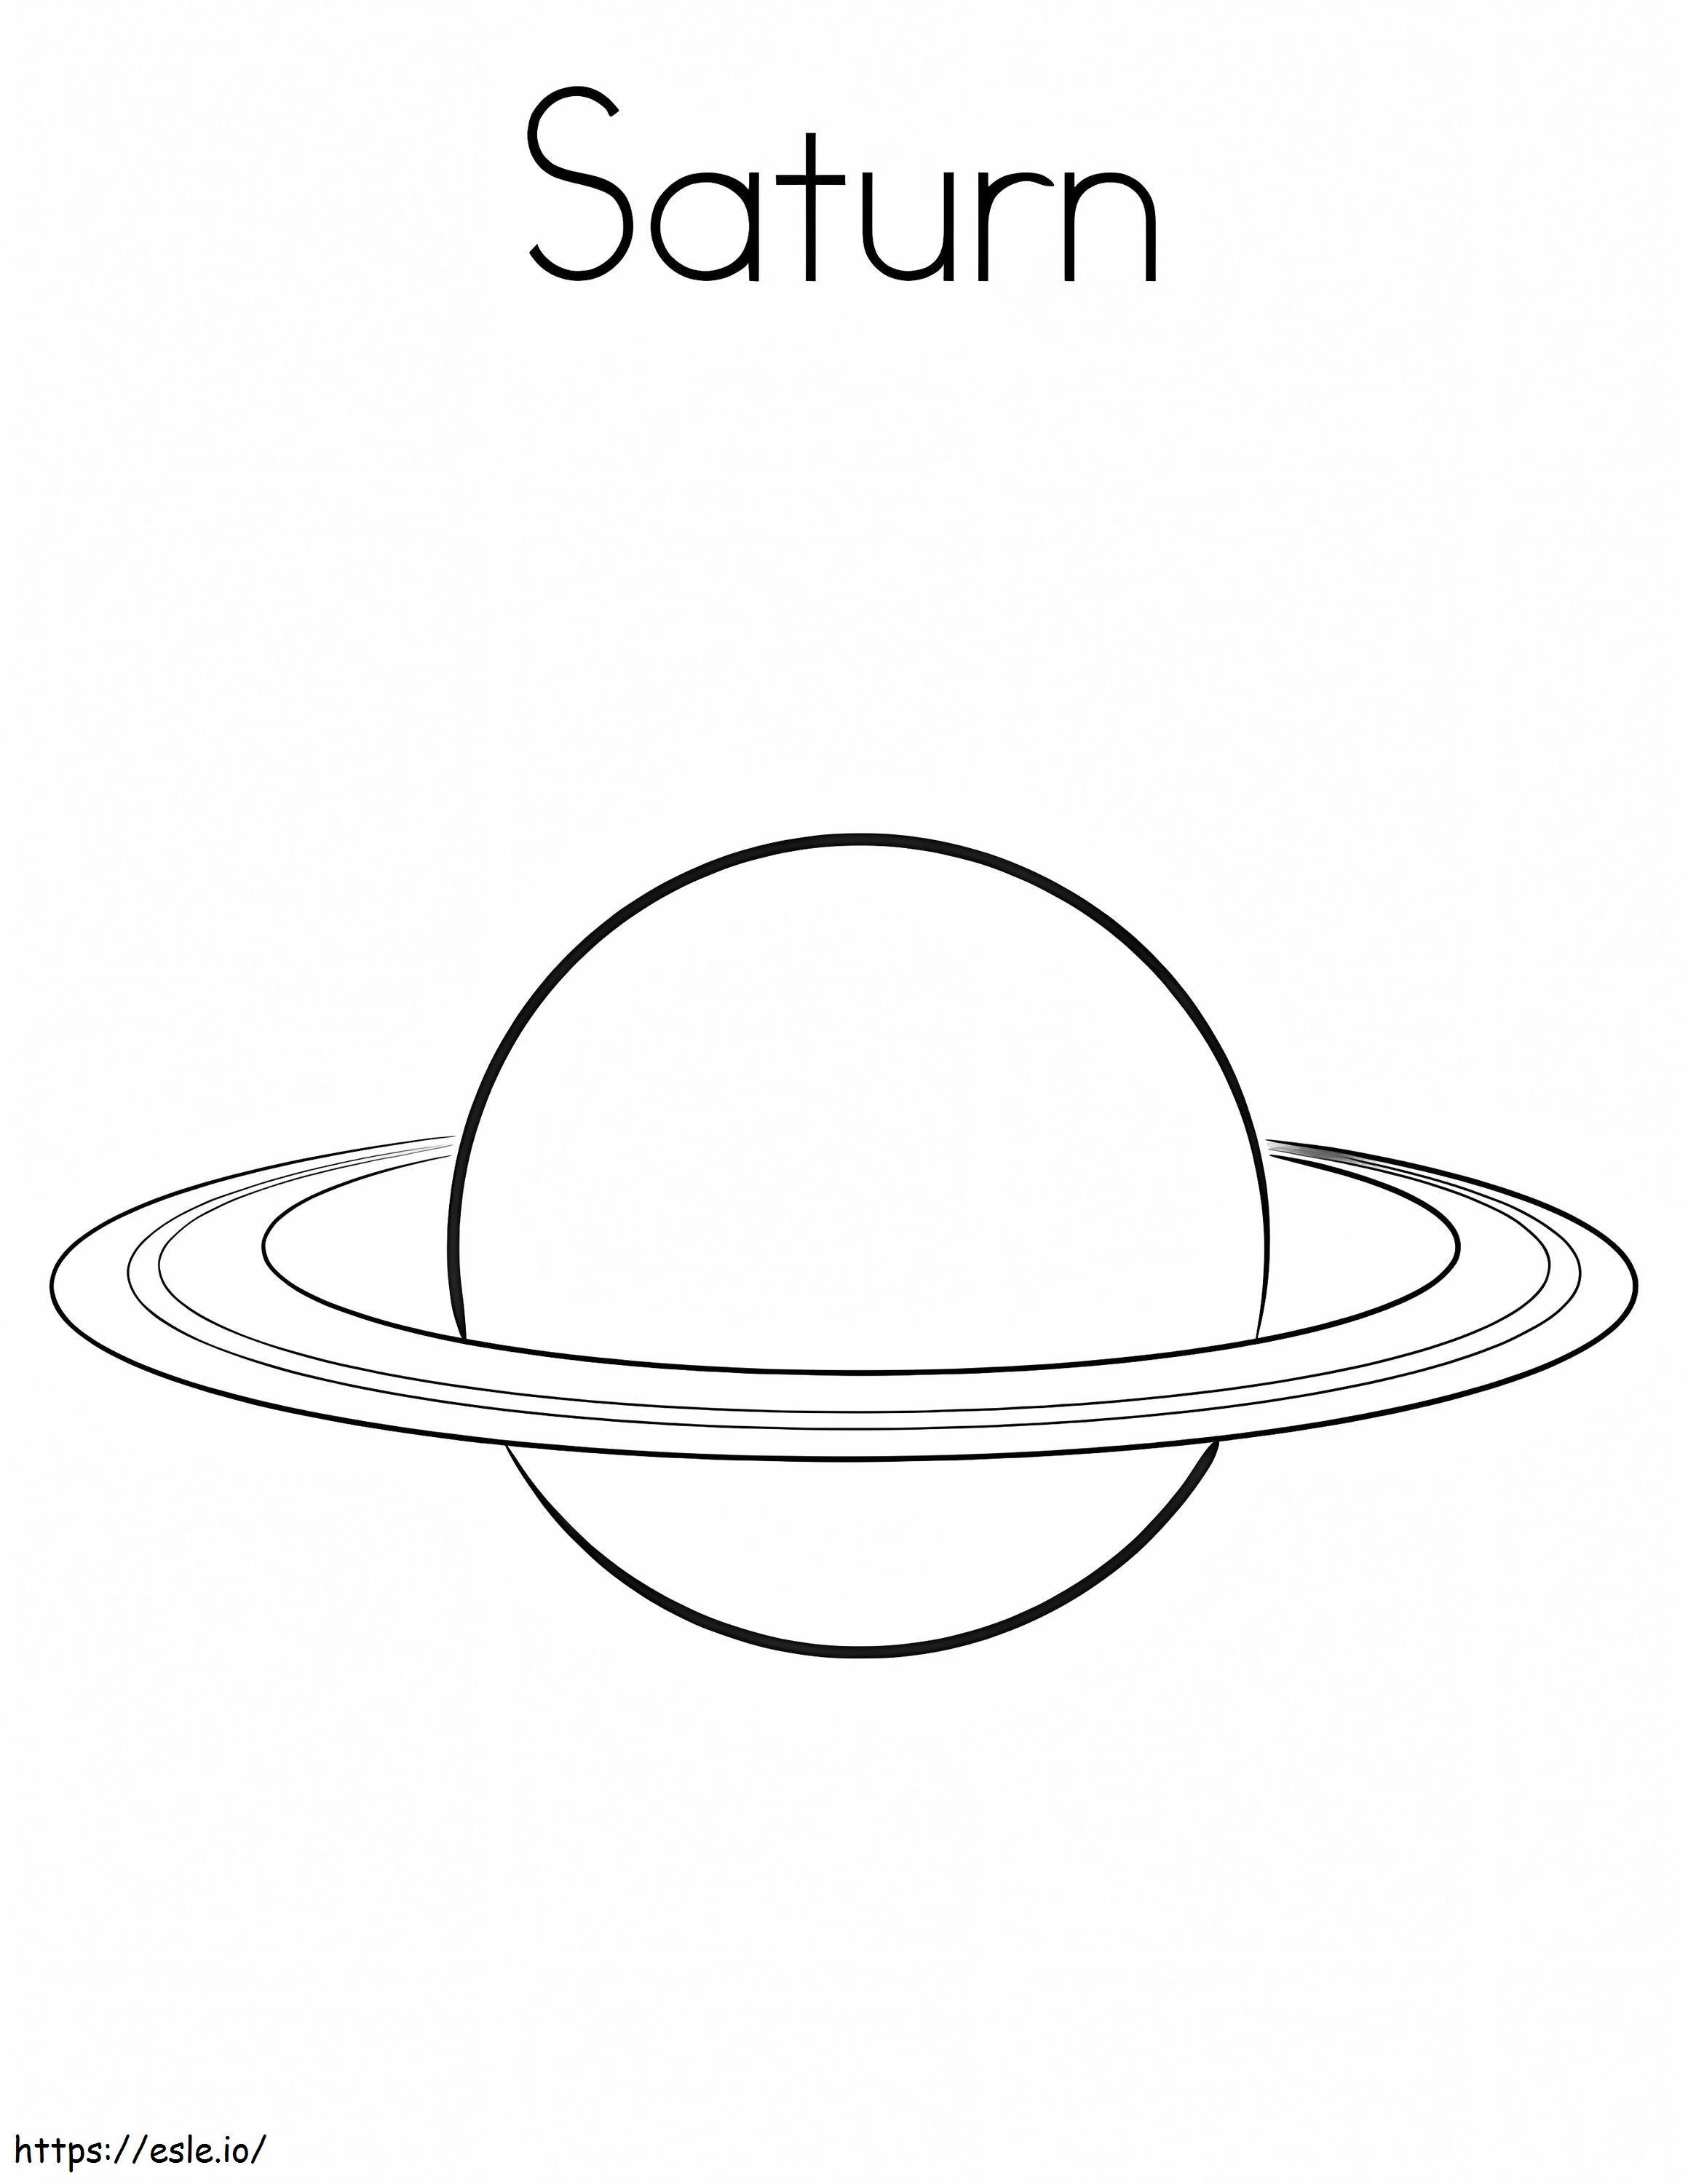 Saturn normal de colorat